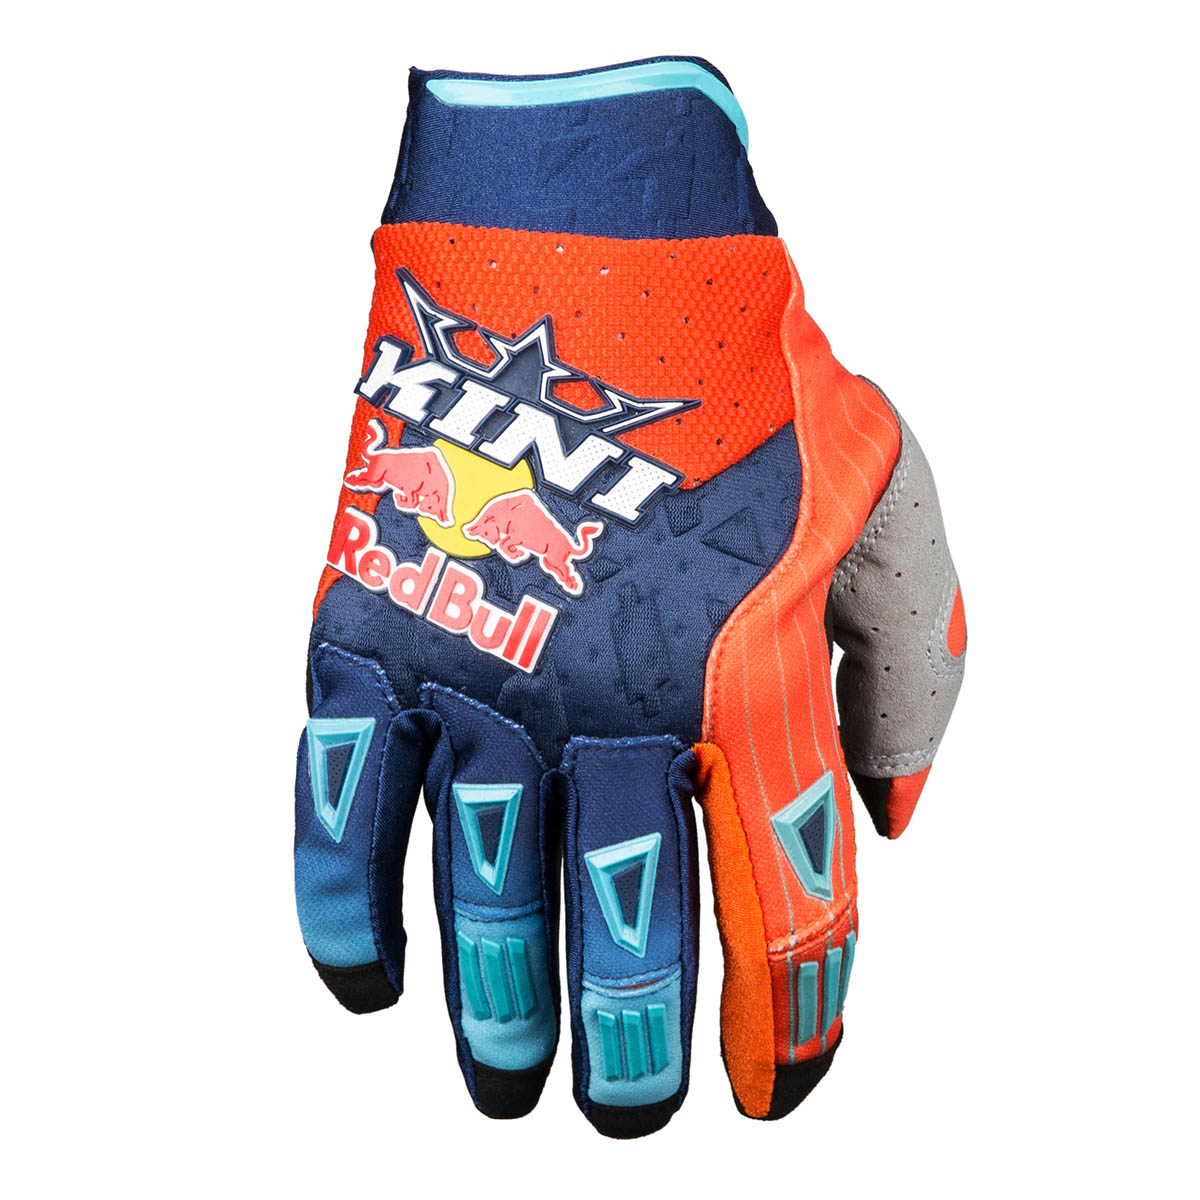 Kini Red Bull Handschuhe Competition Orange/Weiß/Navy